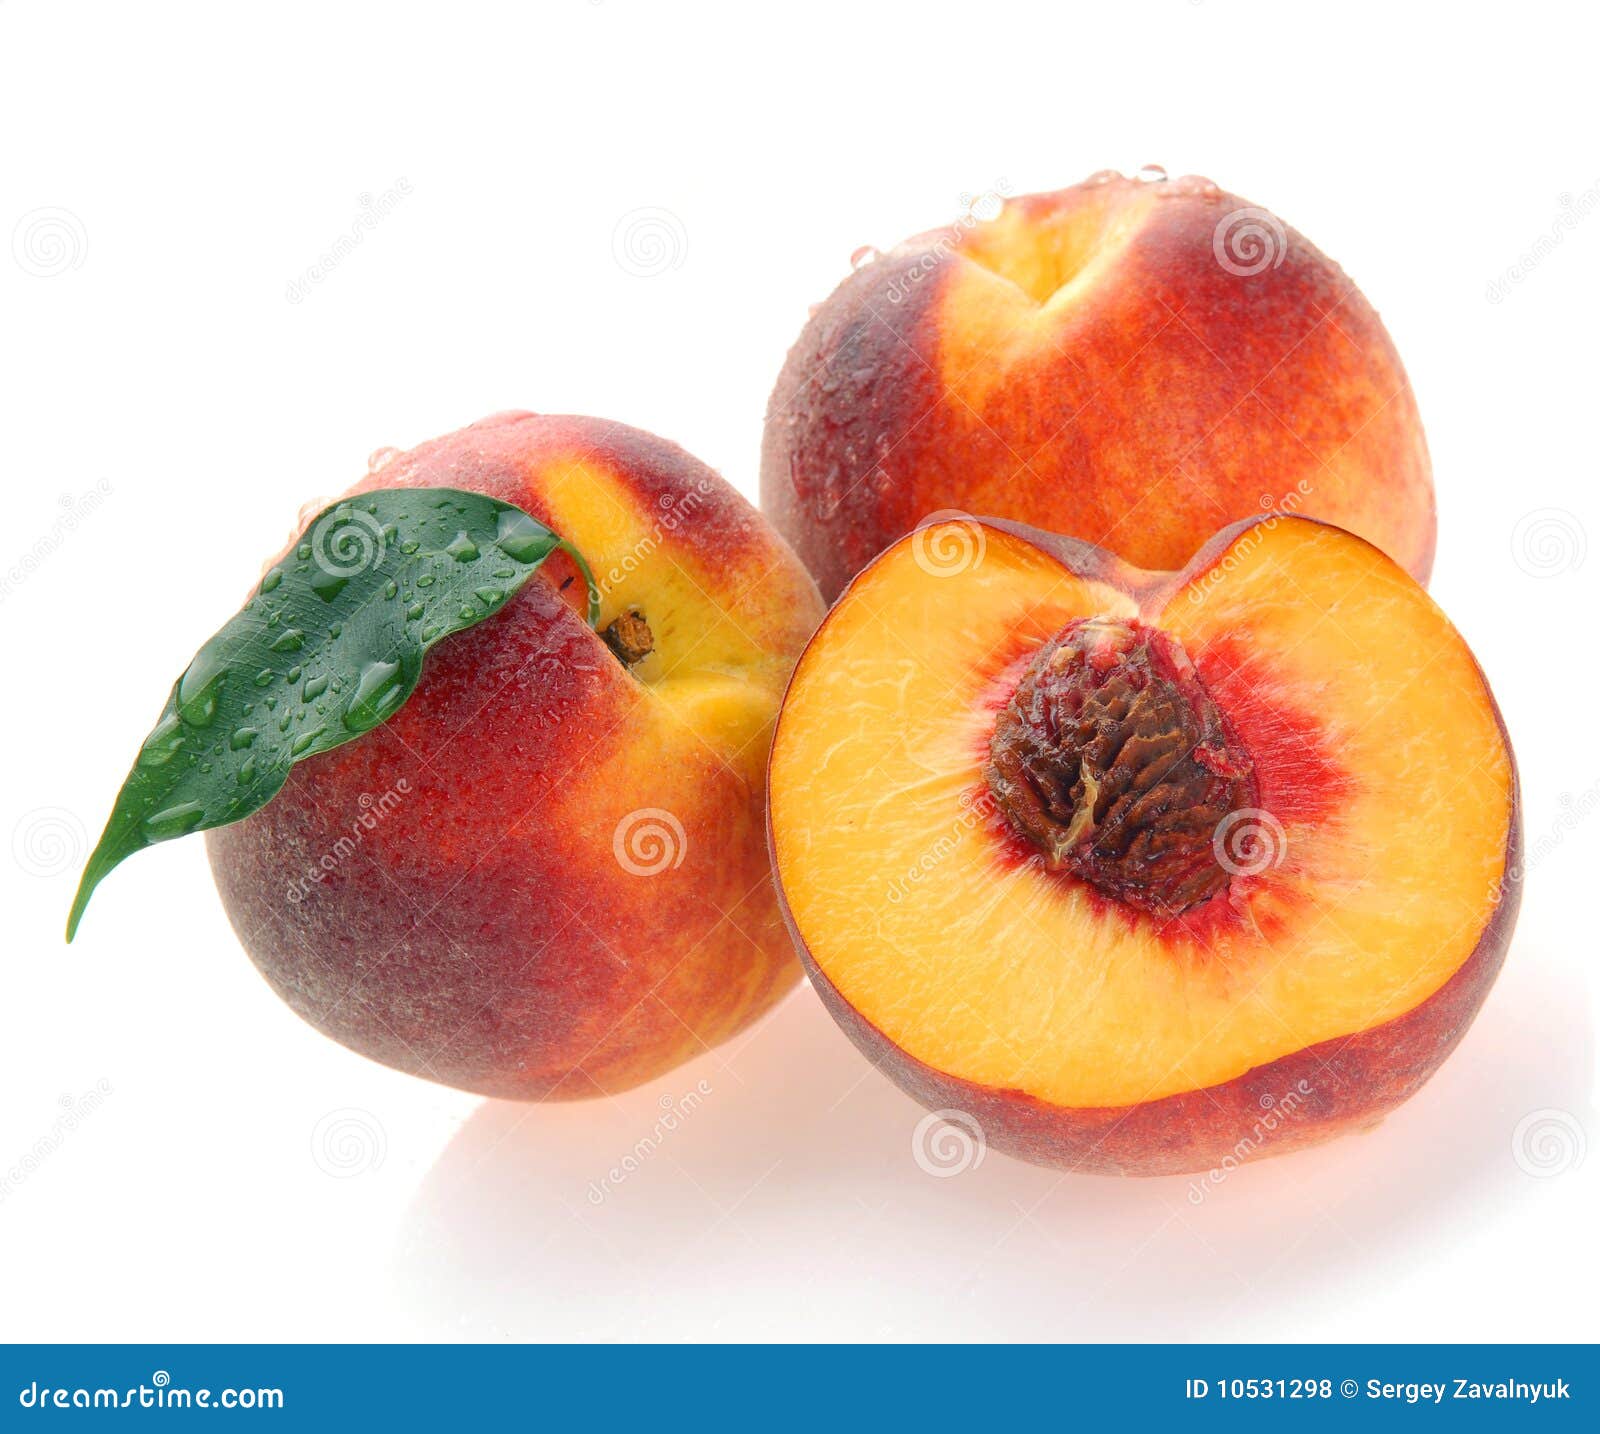 peaches and a half